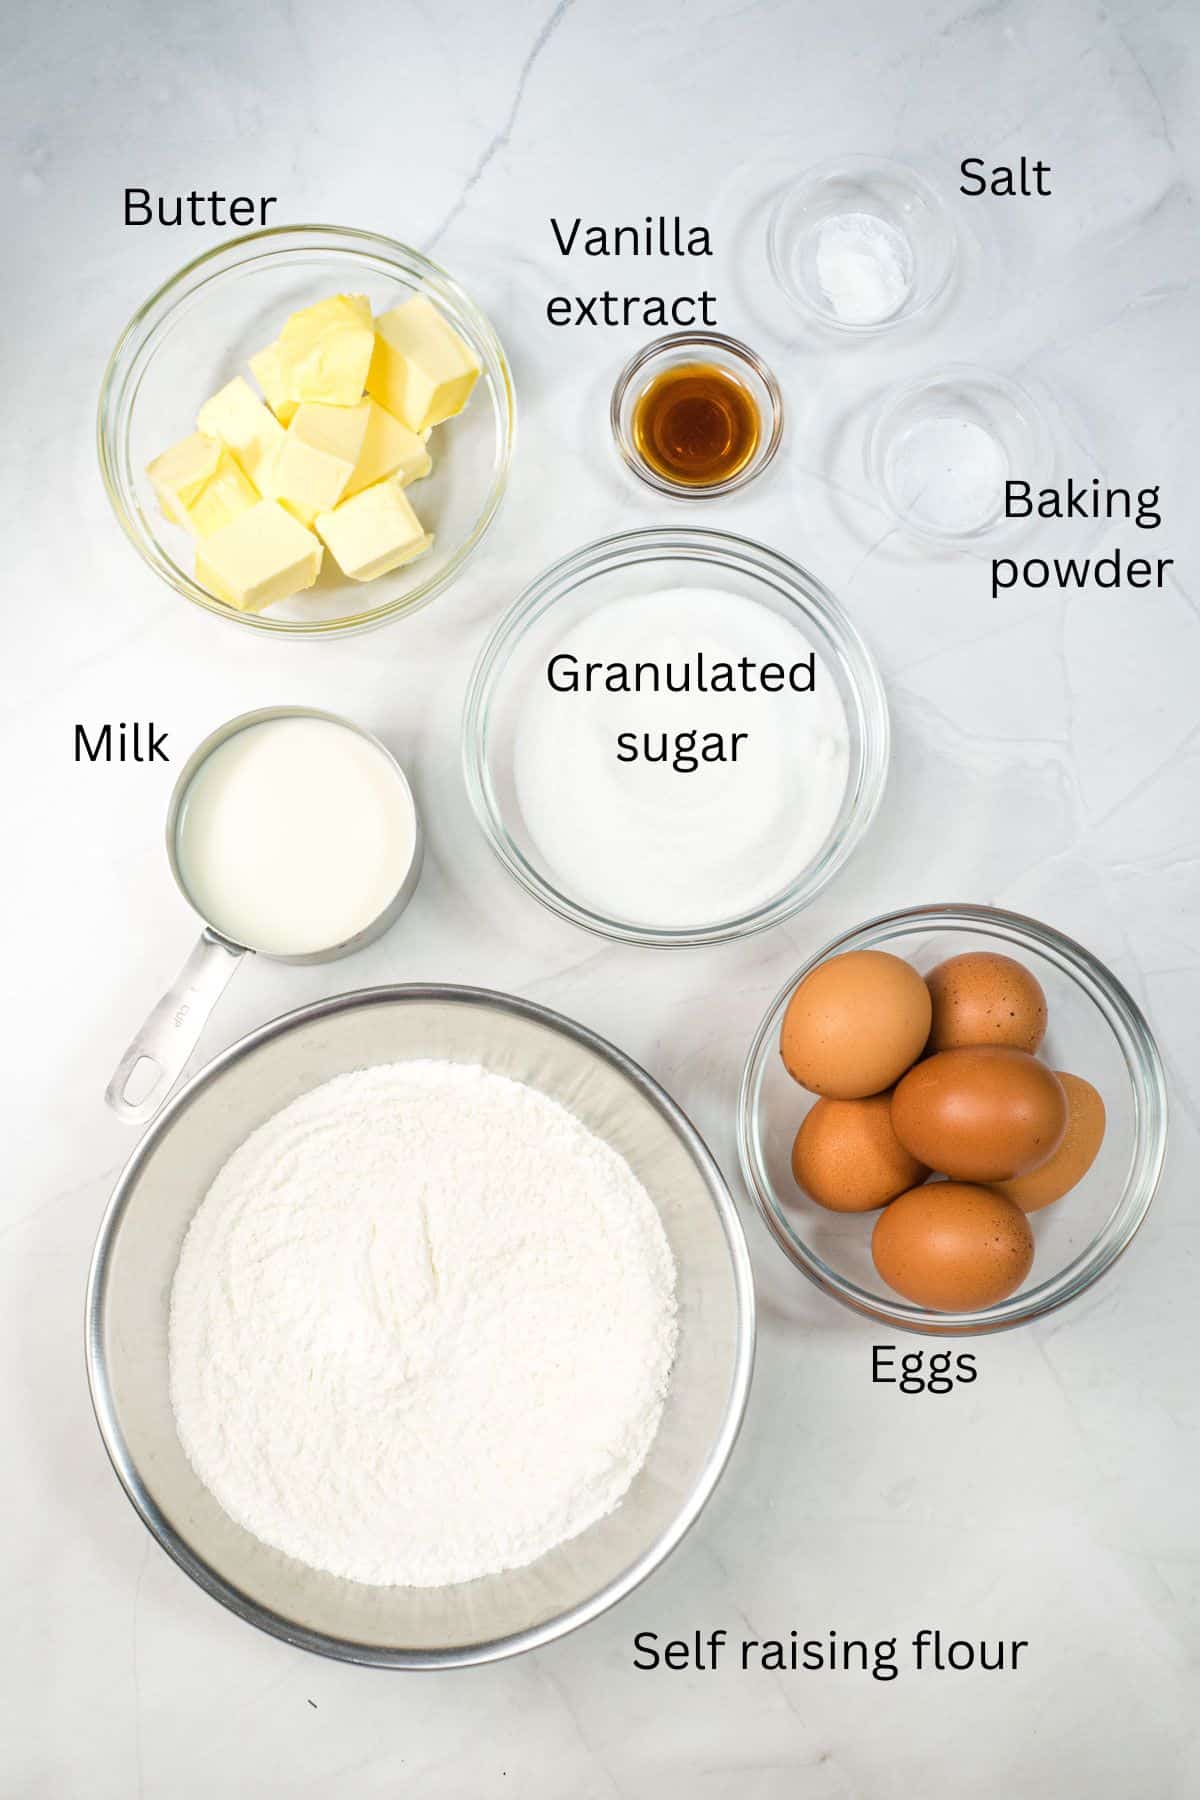 Self raising flour, granulated sugar, baking powder, eggs, milk, vanilla, salt in bowls against a marble background.